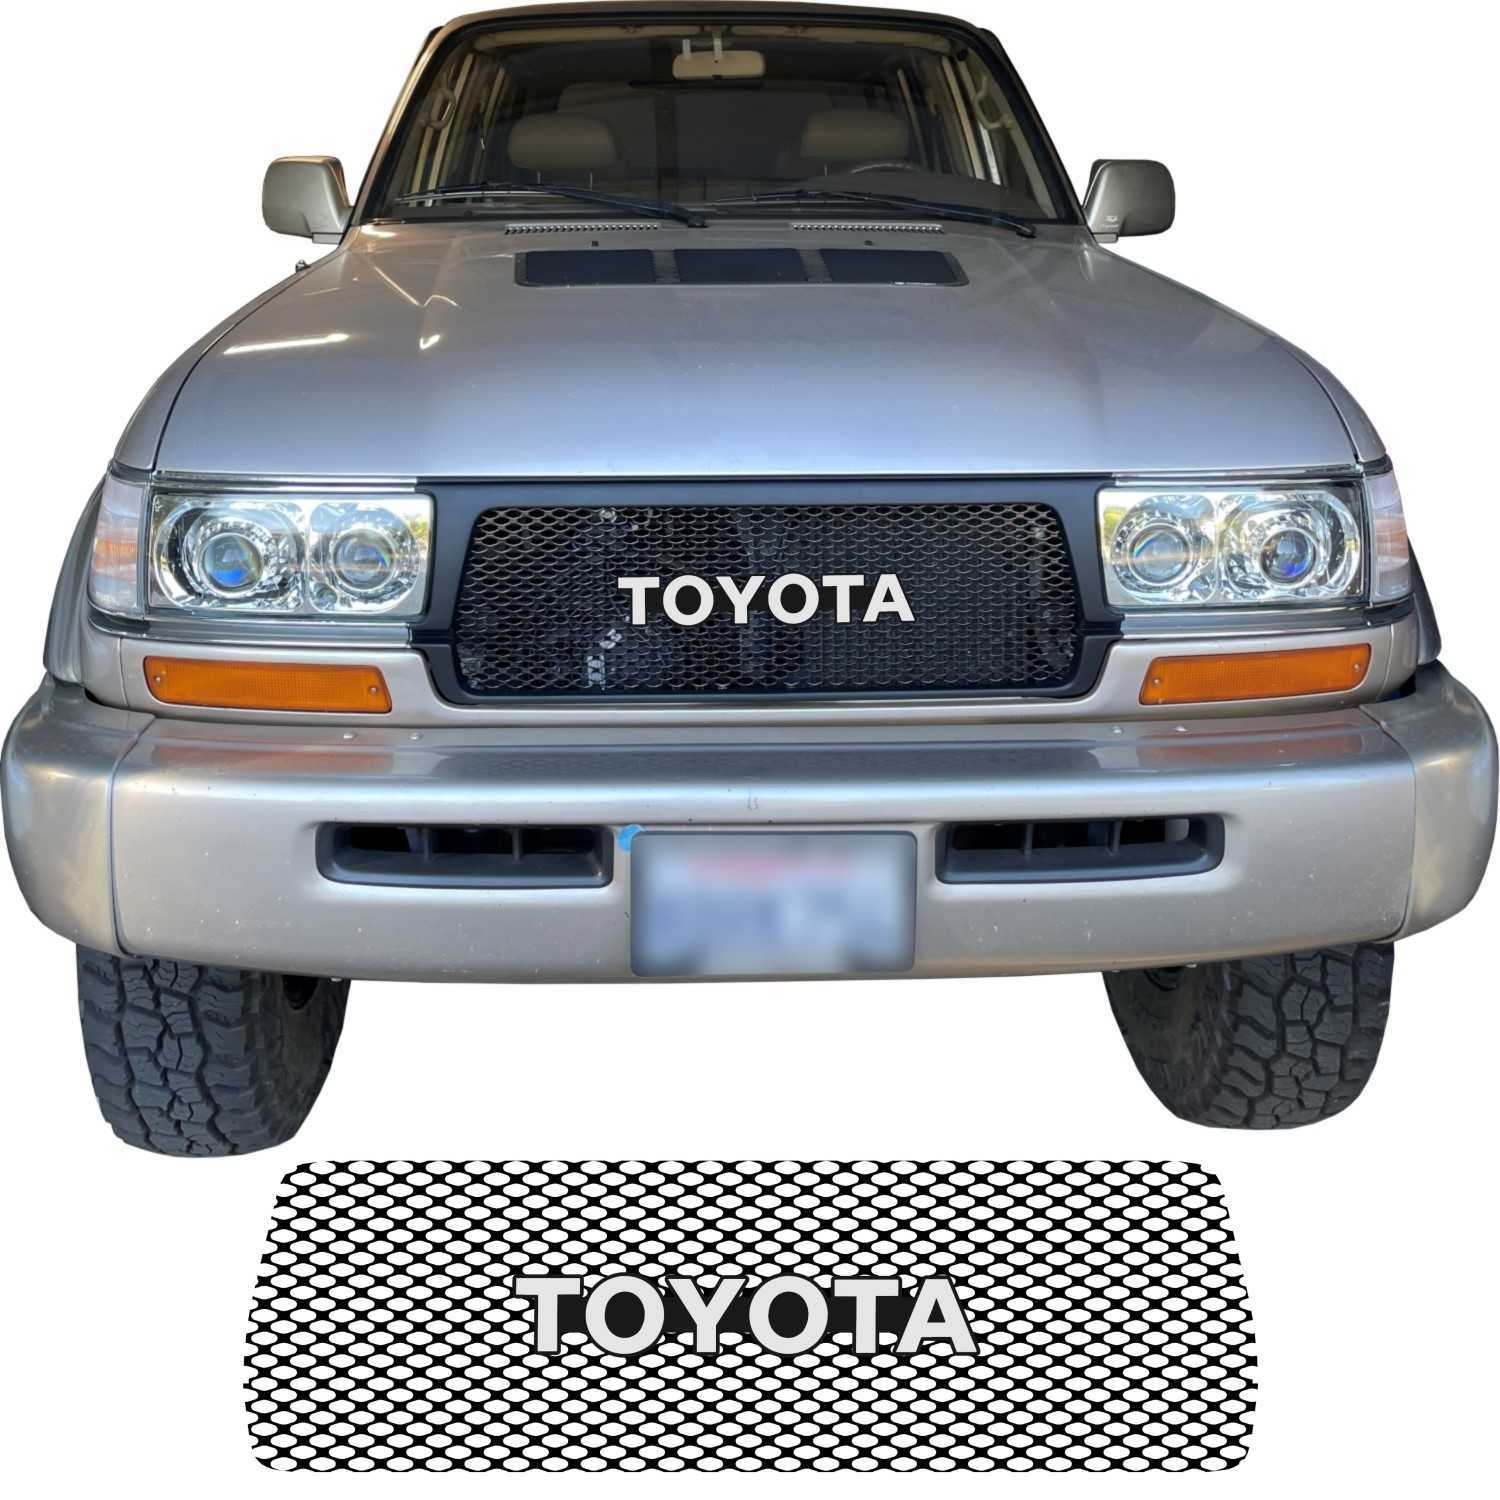 1995 - 1997 Toyota Land Cruiser Series 80 Grill Mesh and Toyota Emblem